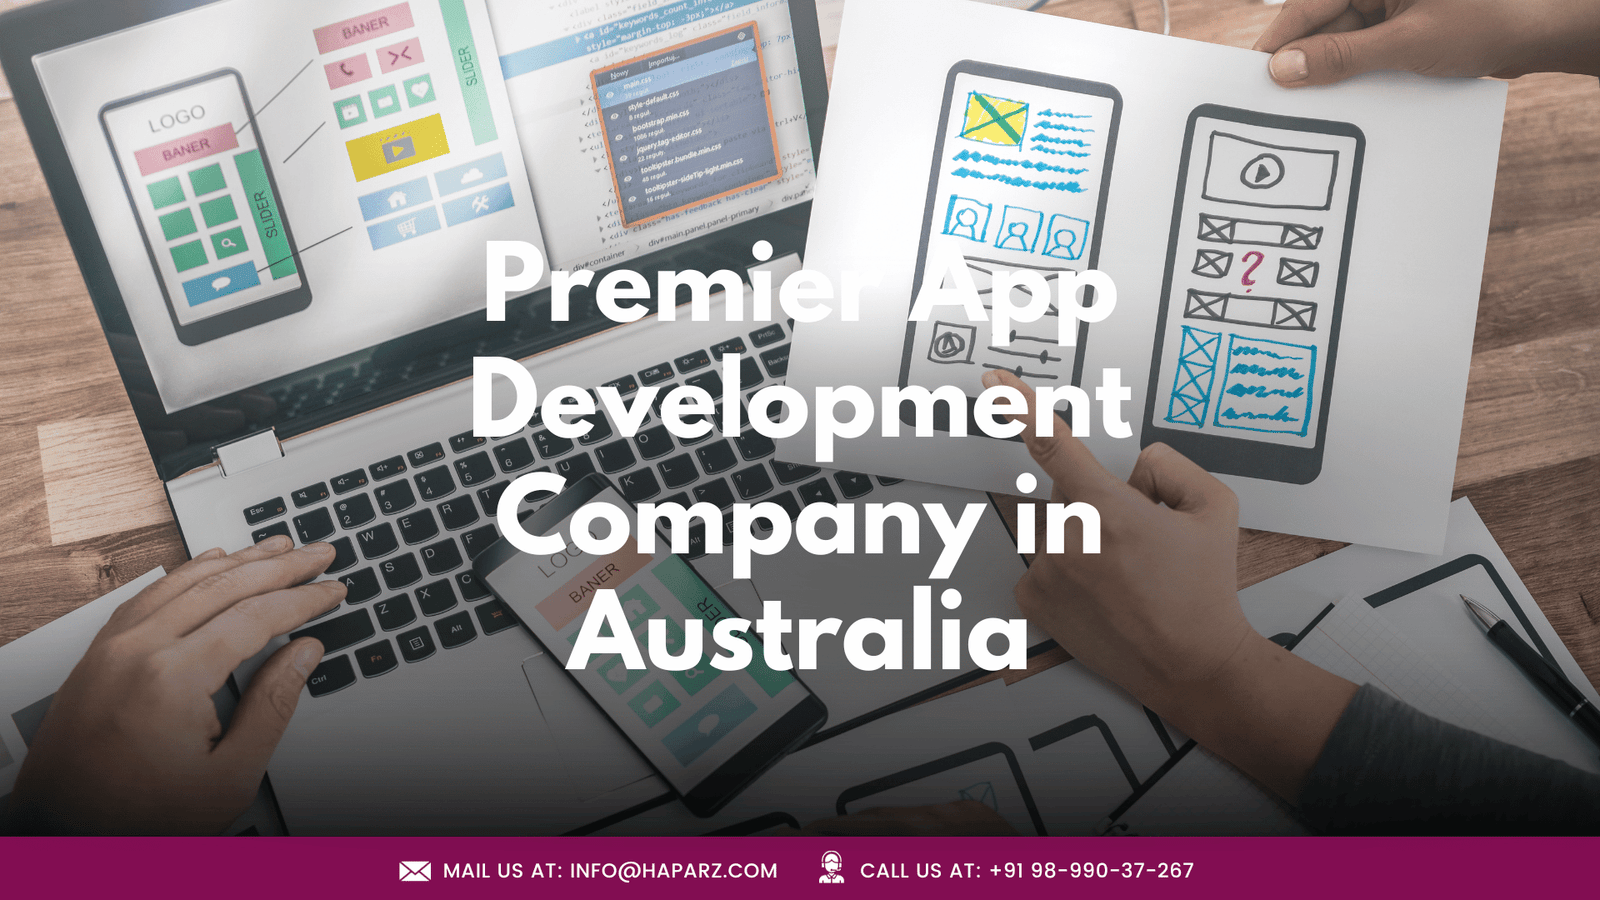 Premier App Development Company in Australia